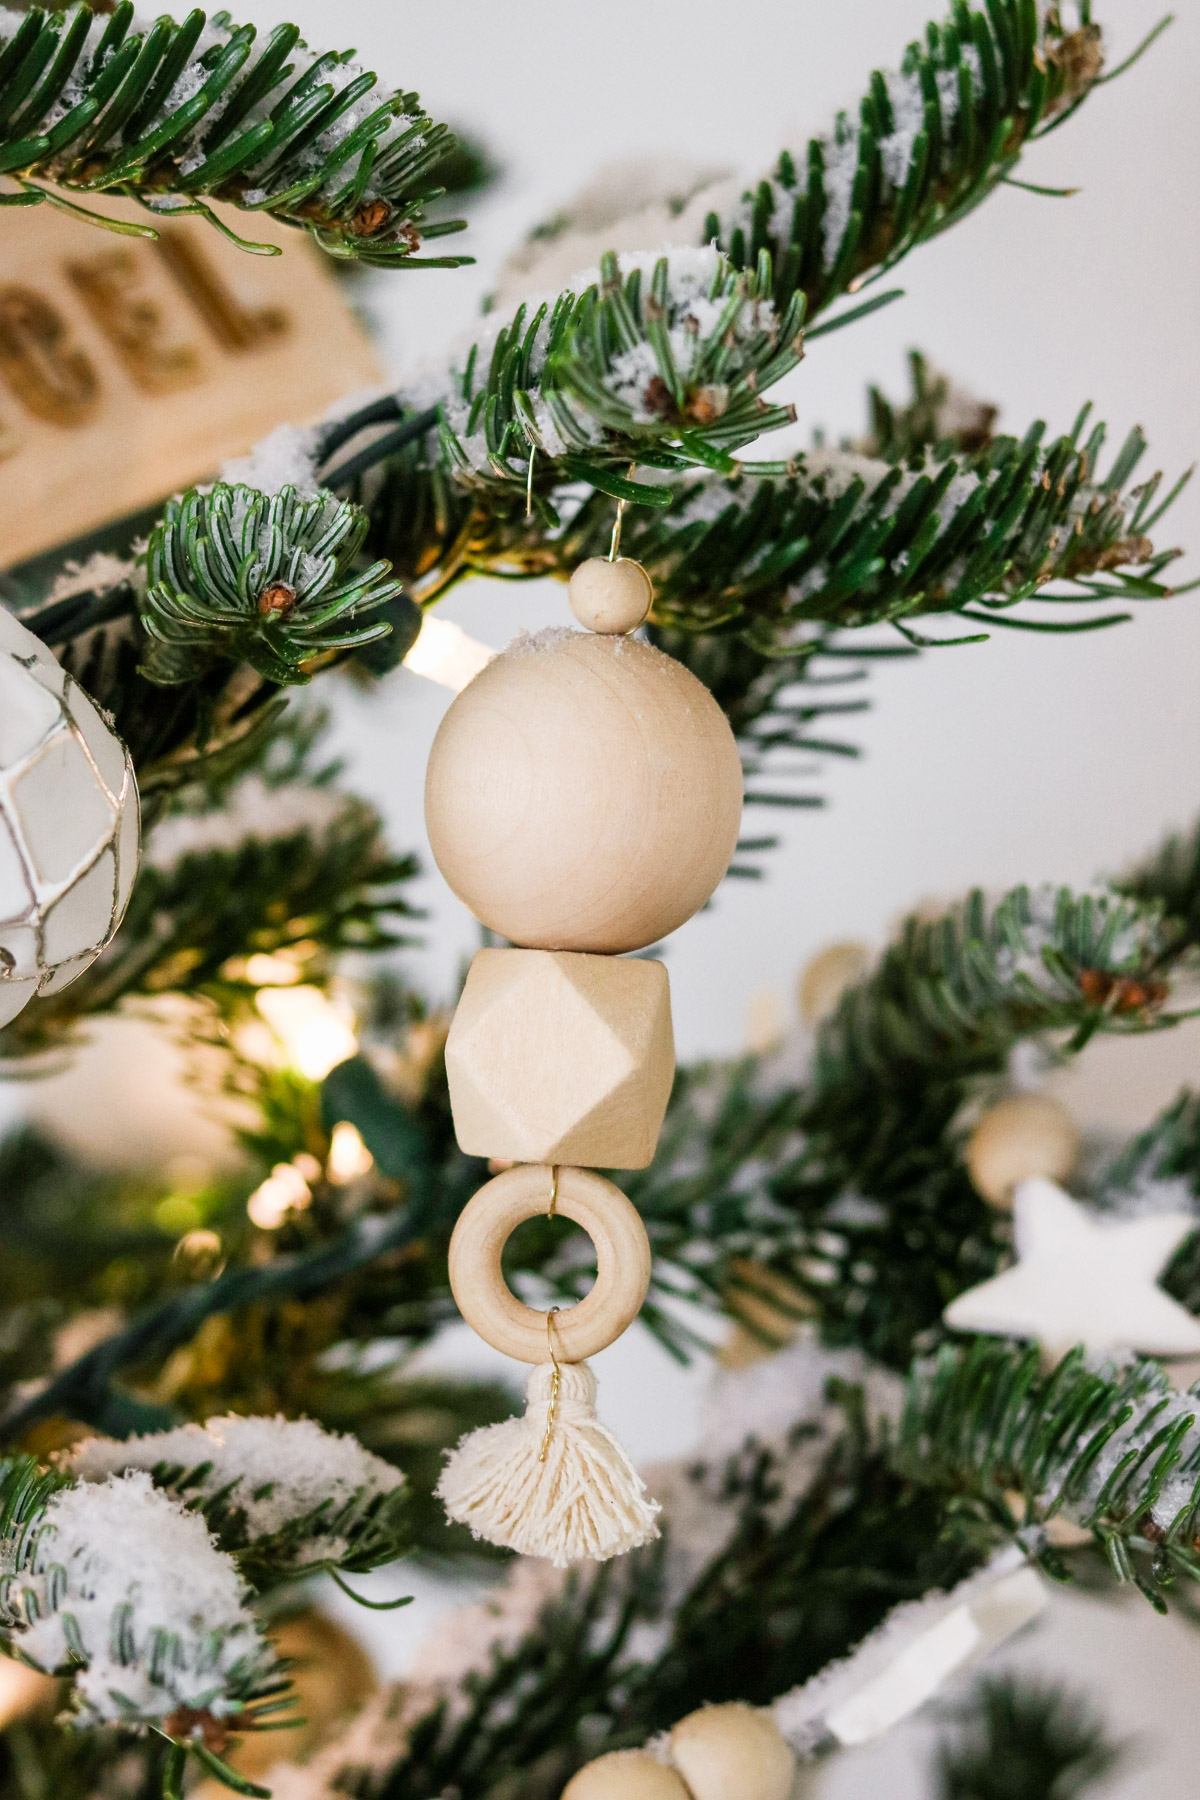 diy wood ornaments with tassels